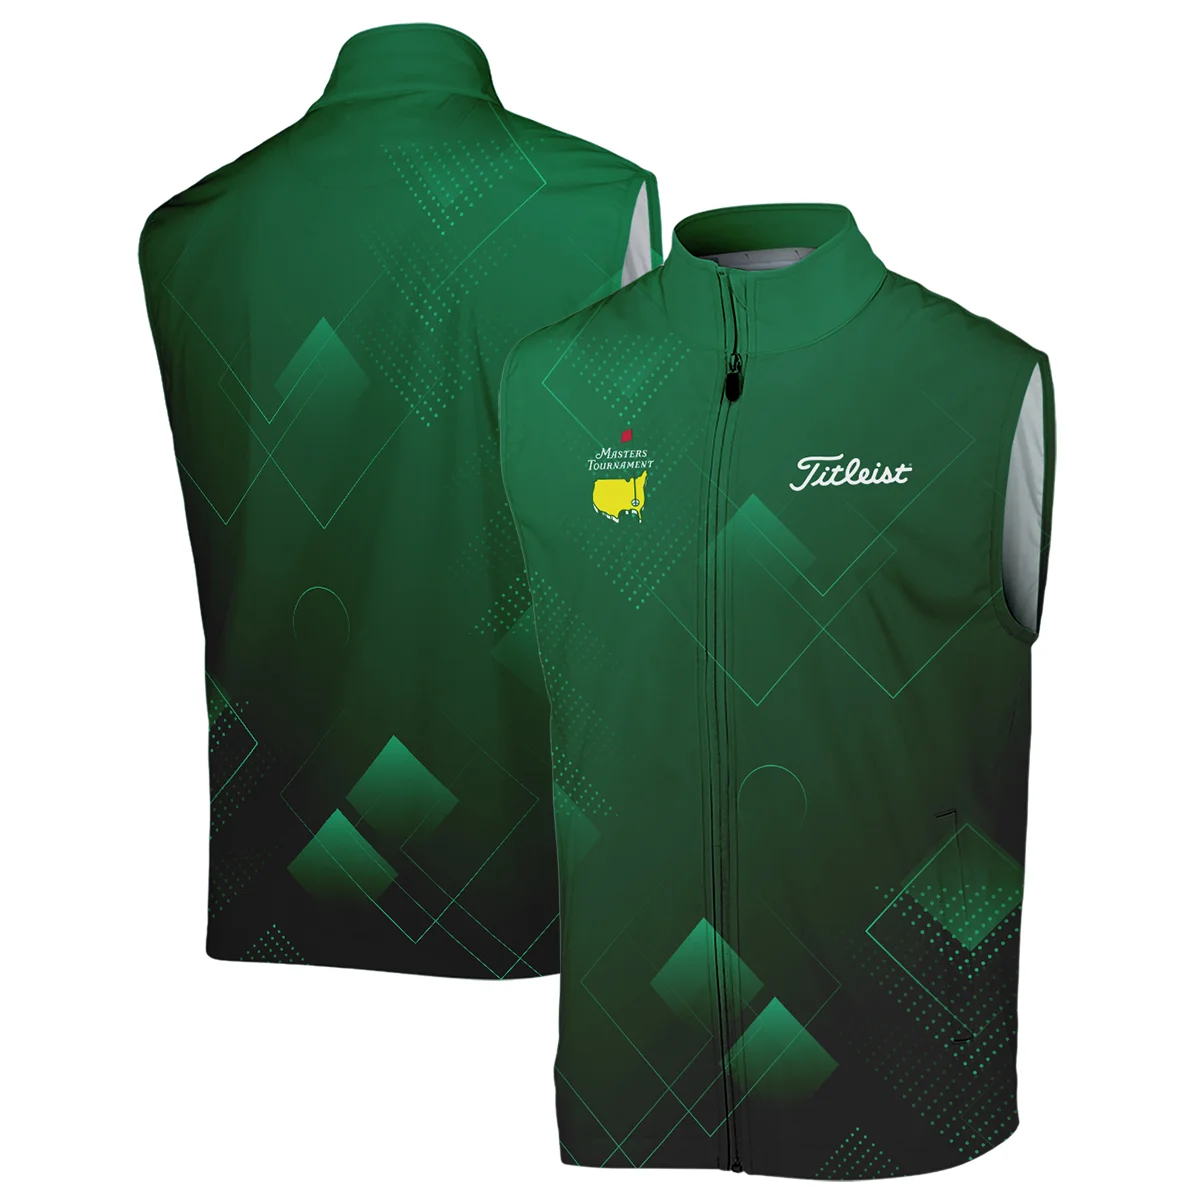 Masters Tournament Titleist Unisex T-Shirt Golf Sports Green Abstract Geometric T-Shirt